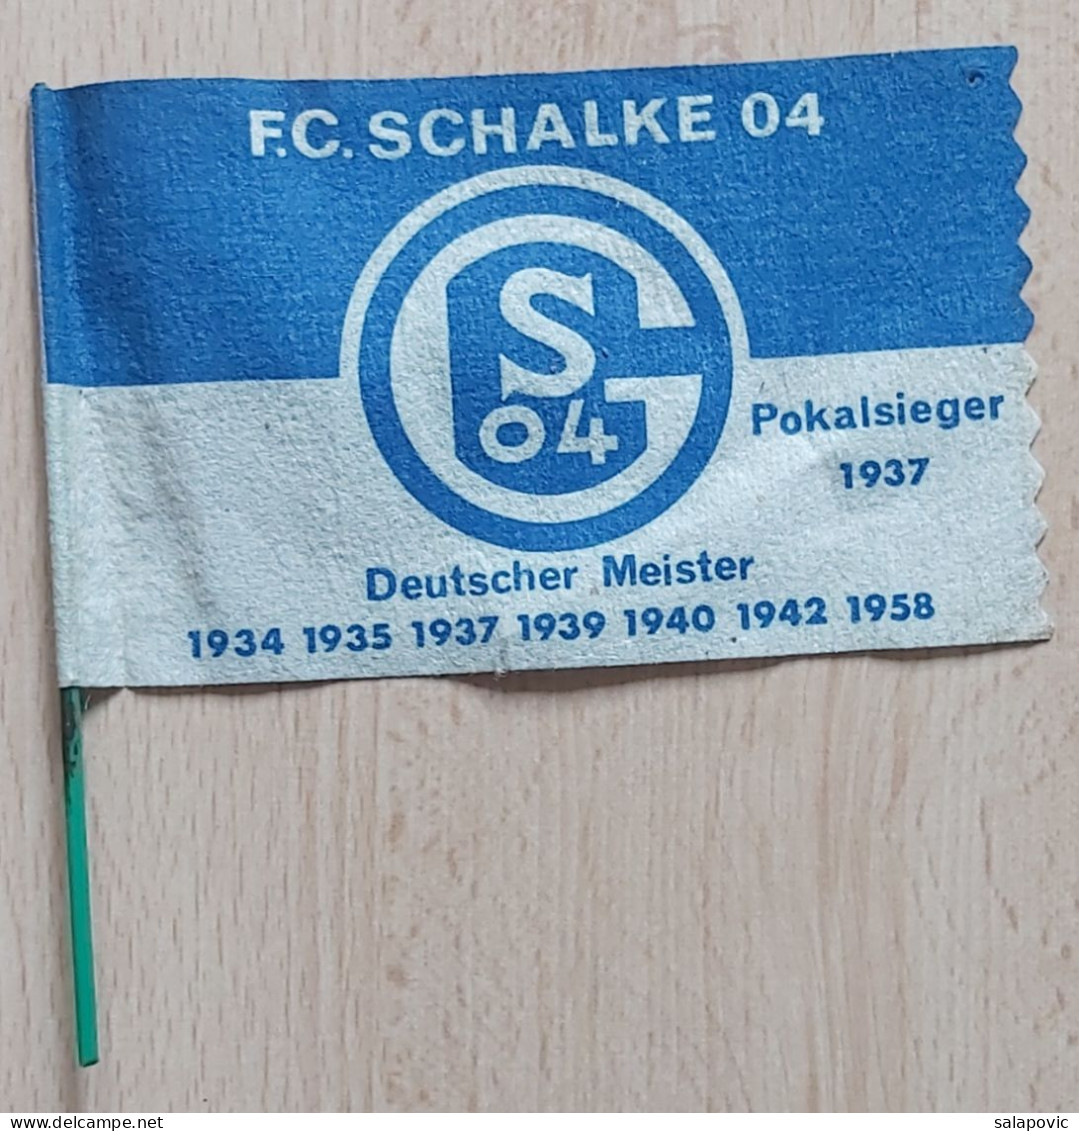 FC Schalke 04 Germany, Football Club Football Fussball Soccer Calcio PENNANT ZS 1 KUT - Habillement, Souvenirs & Autres